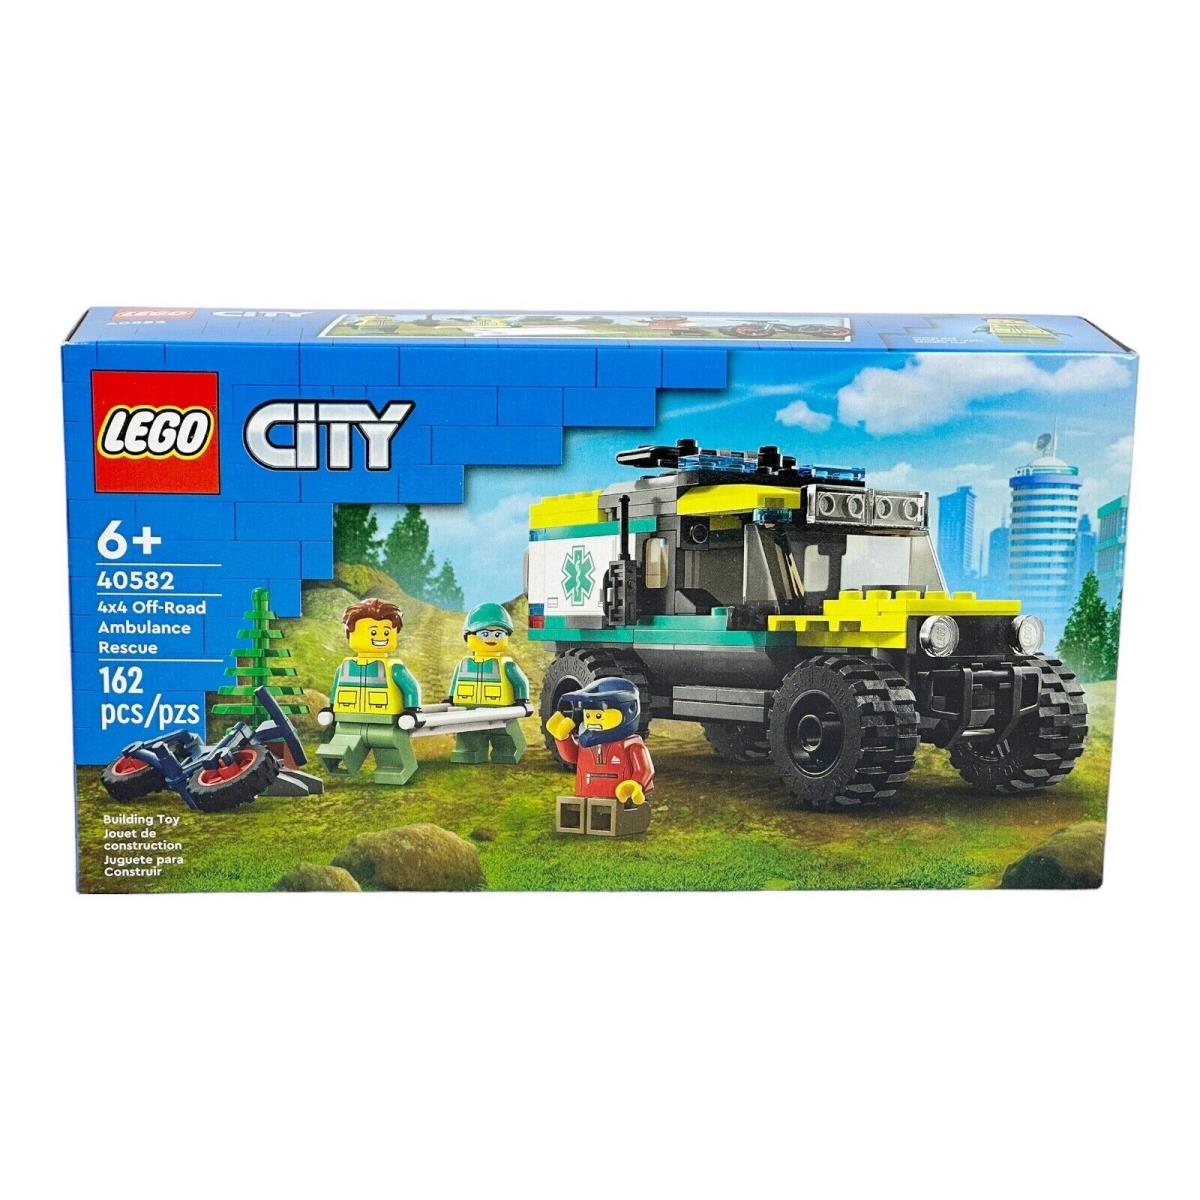 Lego City 40582 4 x 4 Off-road Ambulance Rescue Set